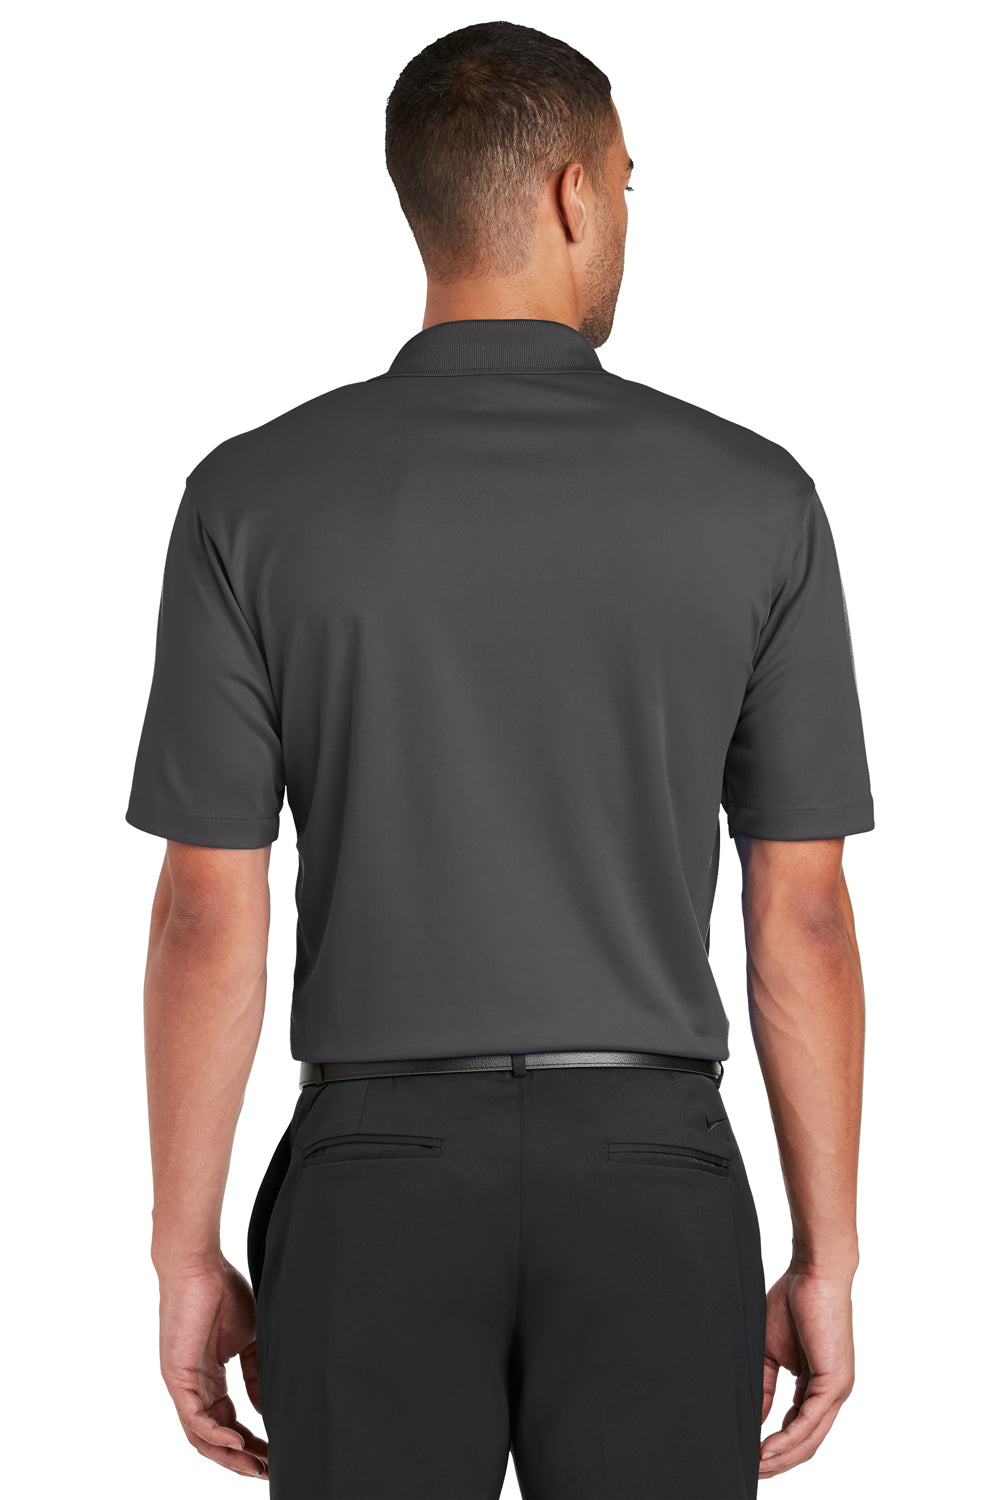 Nike 363807 Mens Dri-Fit Moisture Wicking Short Sleeve Polo Shirt Anthracite Grey Back